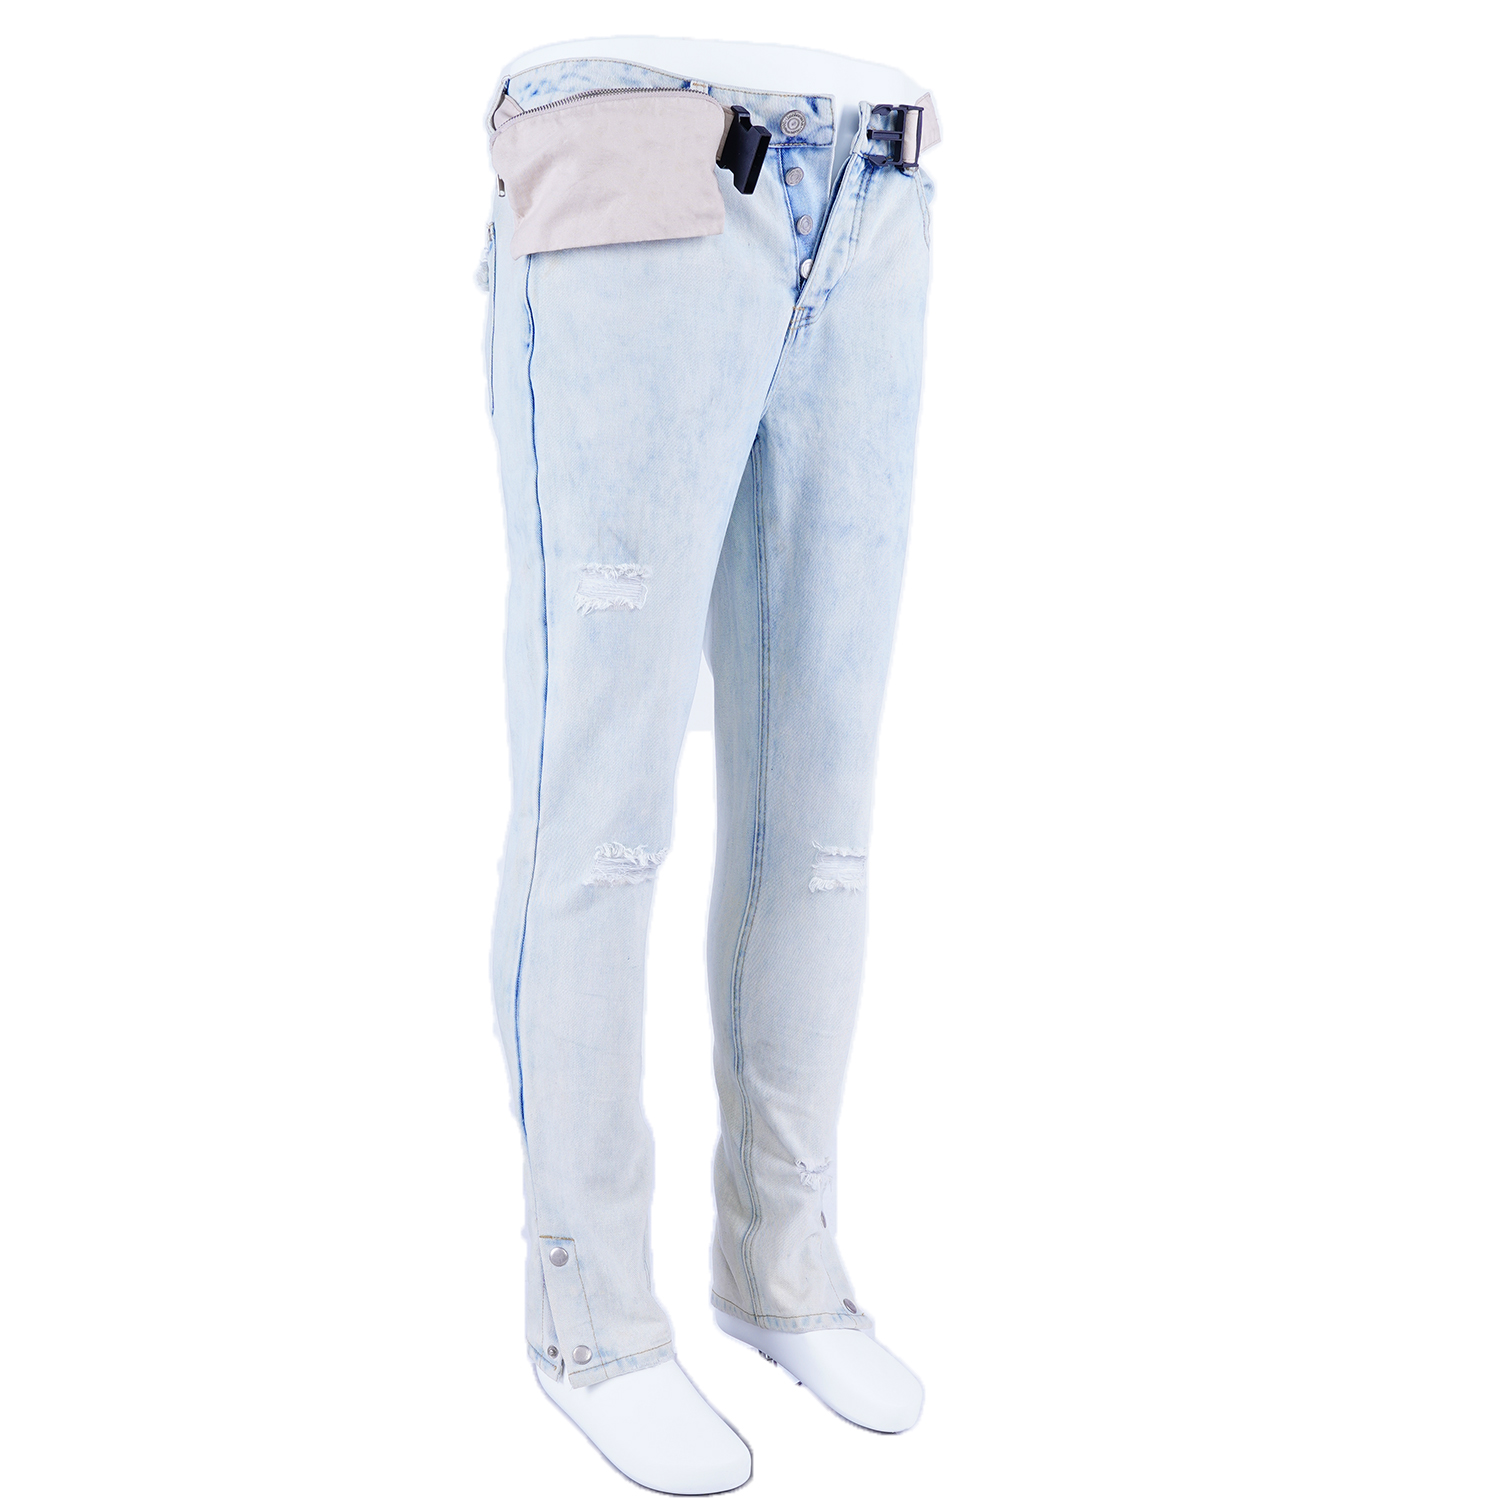 SKYKINGDOM stacked fashion jeans denim blue slim skinny jeans for men